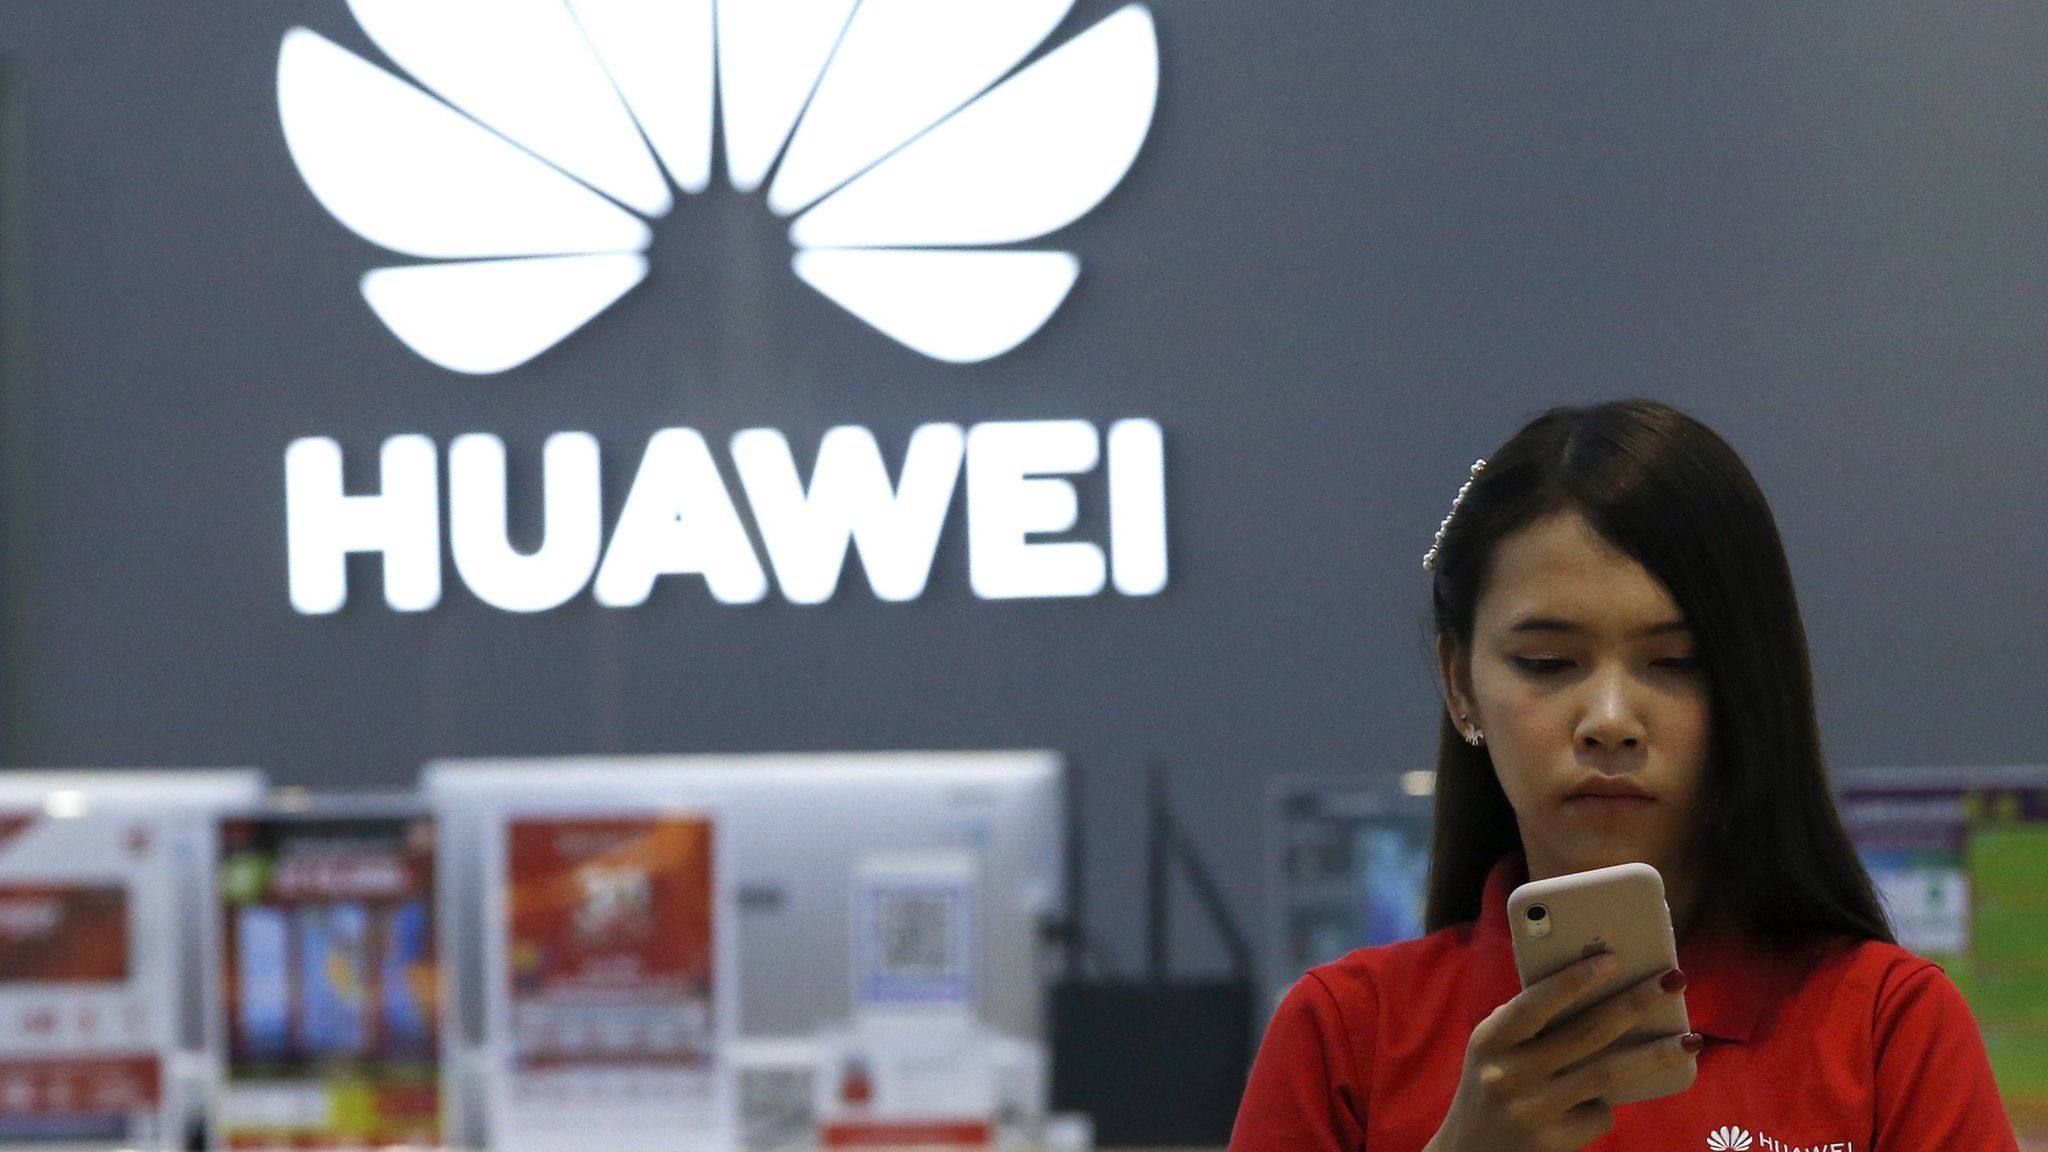 A Thai employee checks a Huawei smartphone at a Huawei store in Bangkok, Thailand, 21 May 2019.